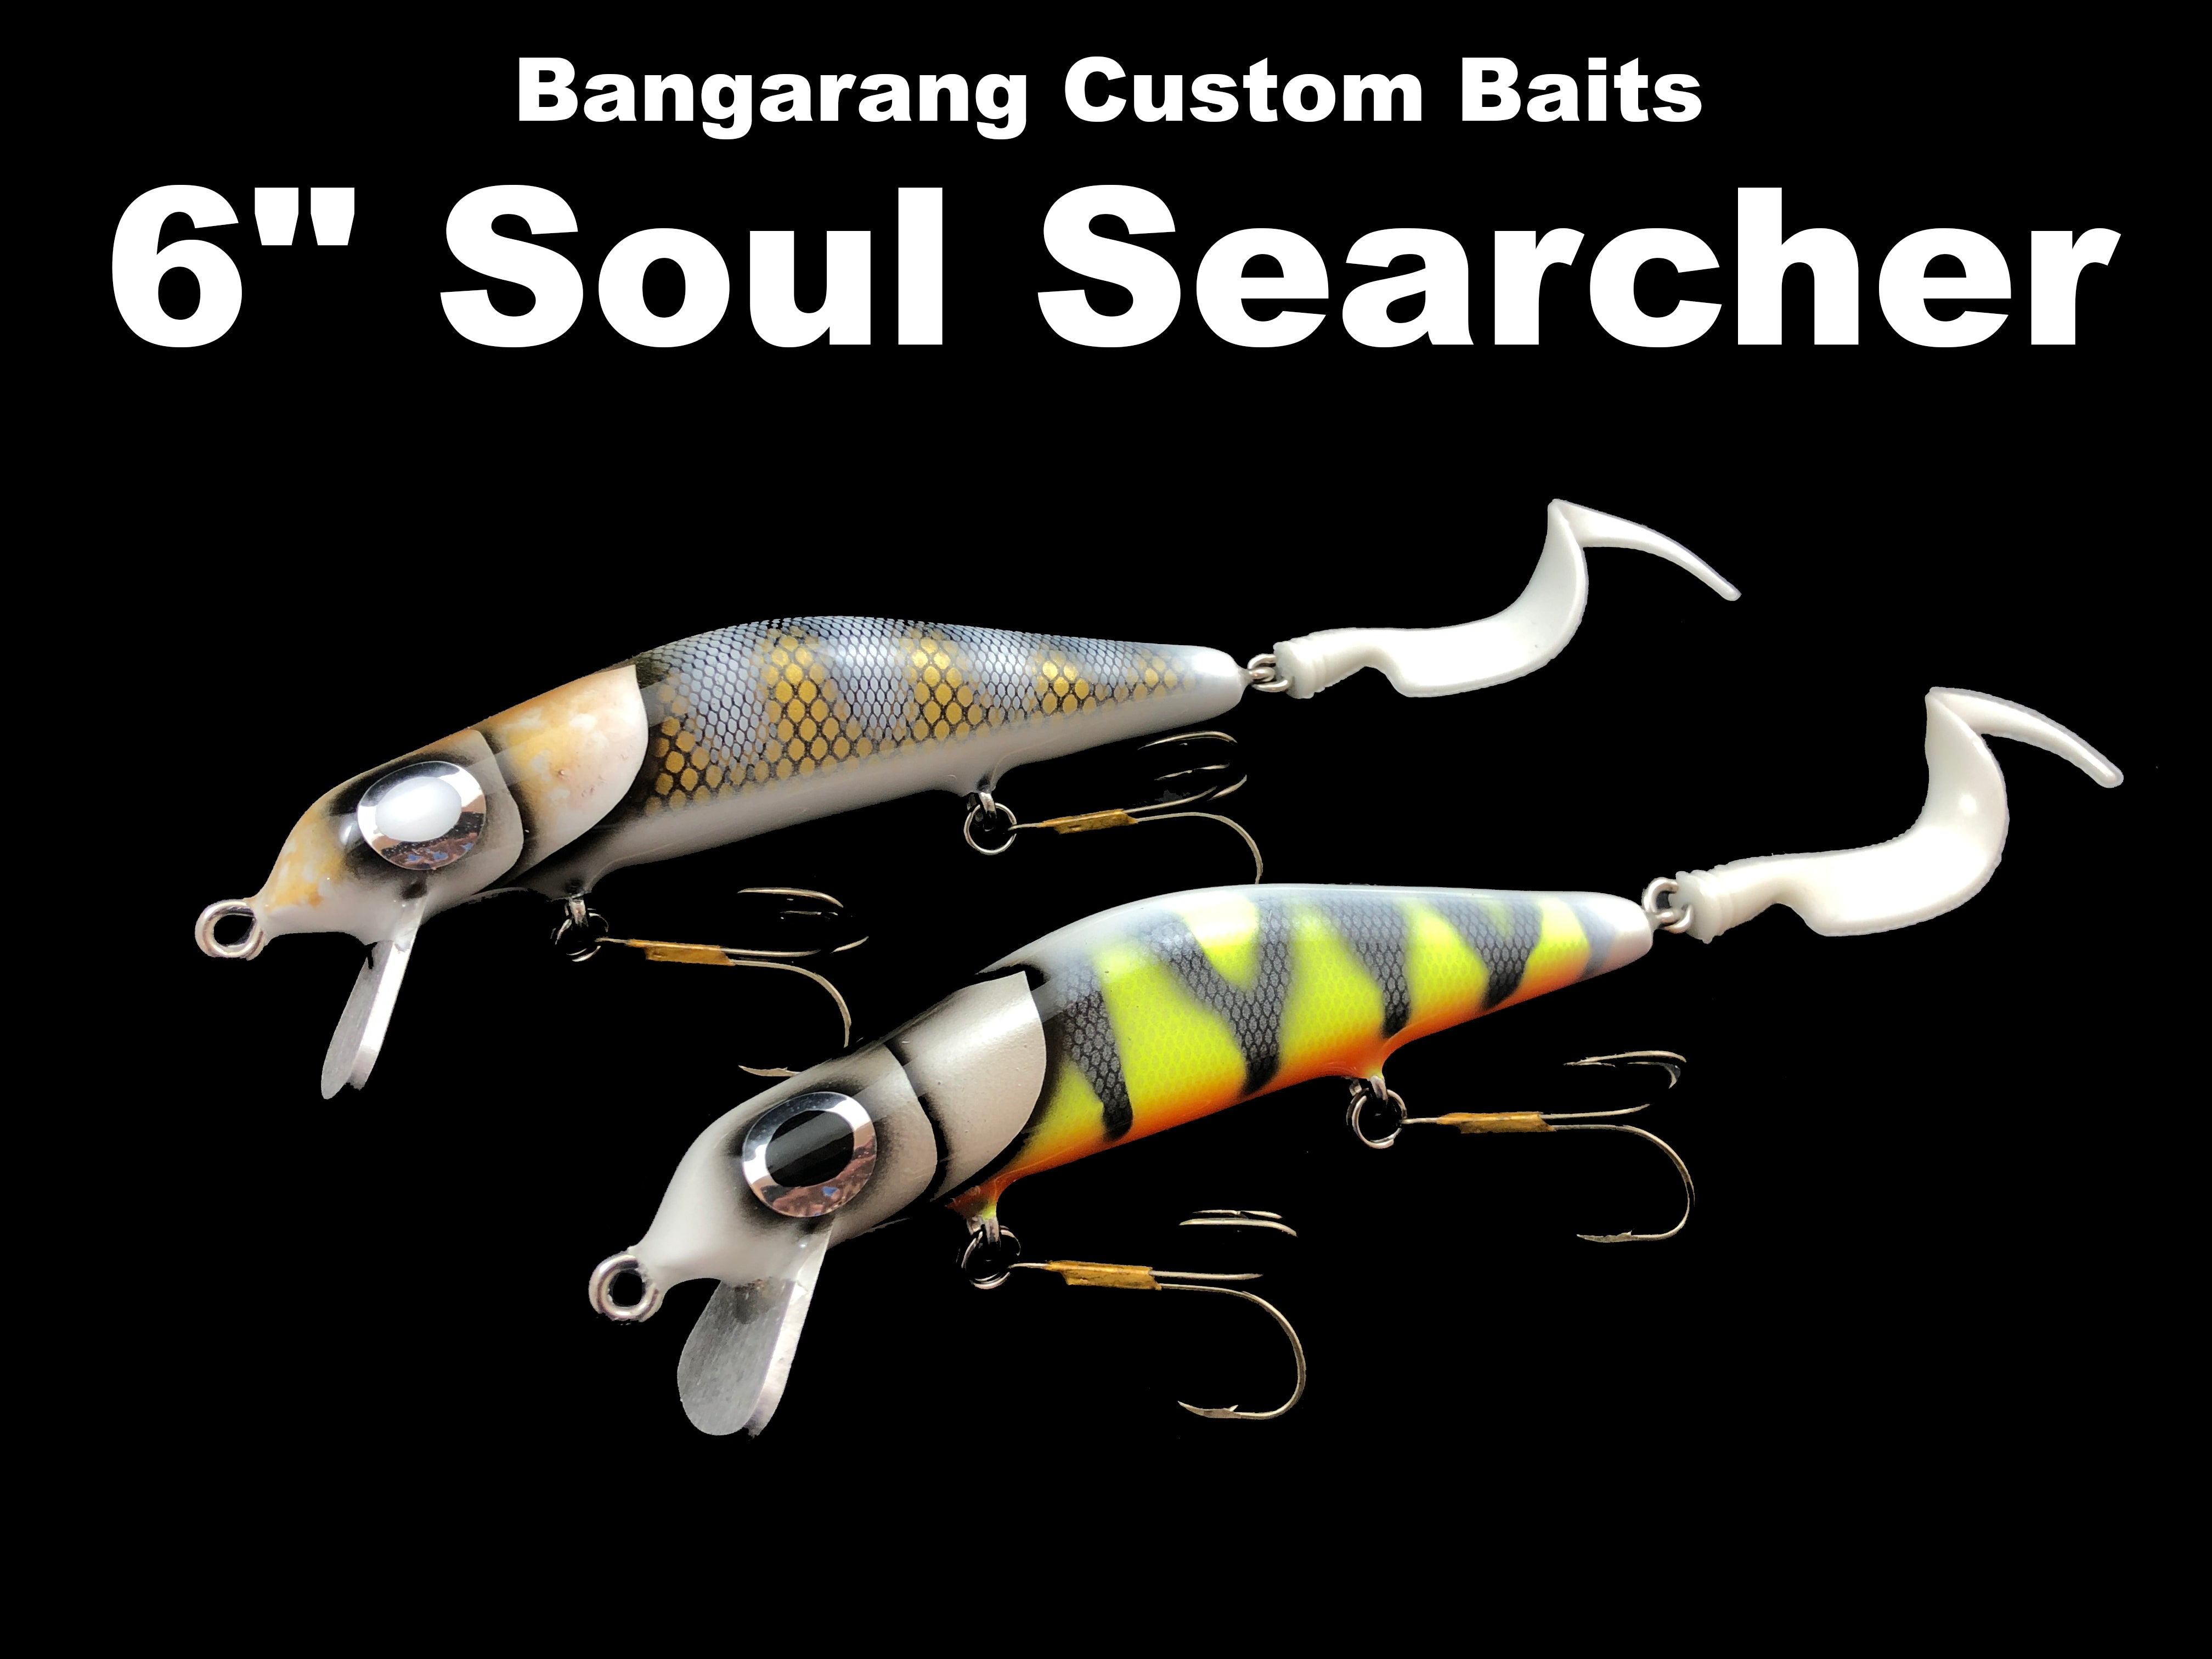 Bangarang Custom Baits - 6 Soul Searcher